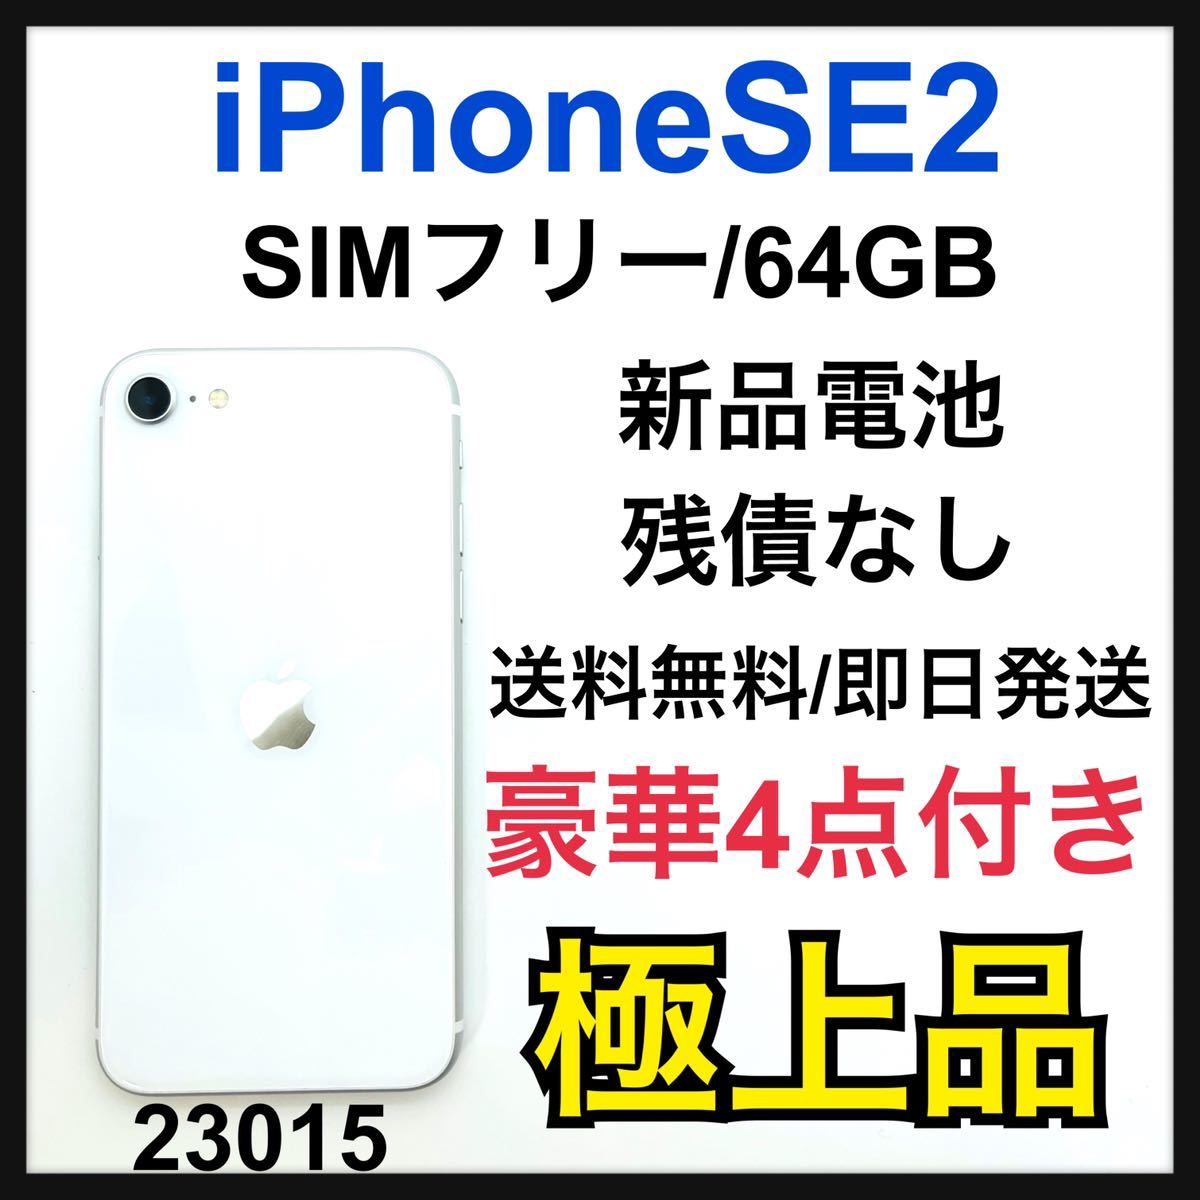 S iPhone SE 第2世代 (SE2) ホワイト 64 GB SIMフリー www.freixenet.com